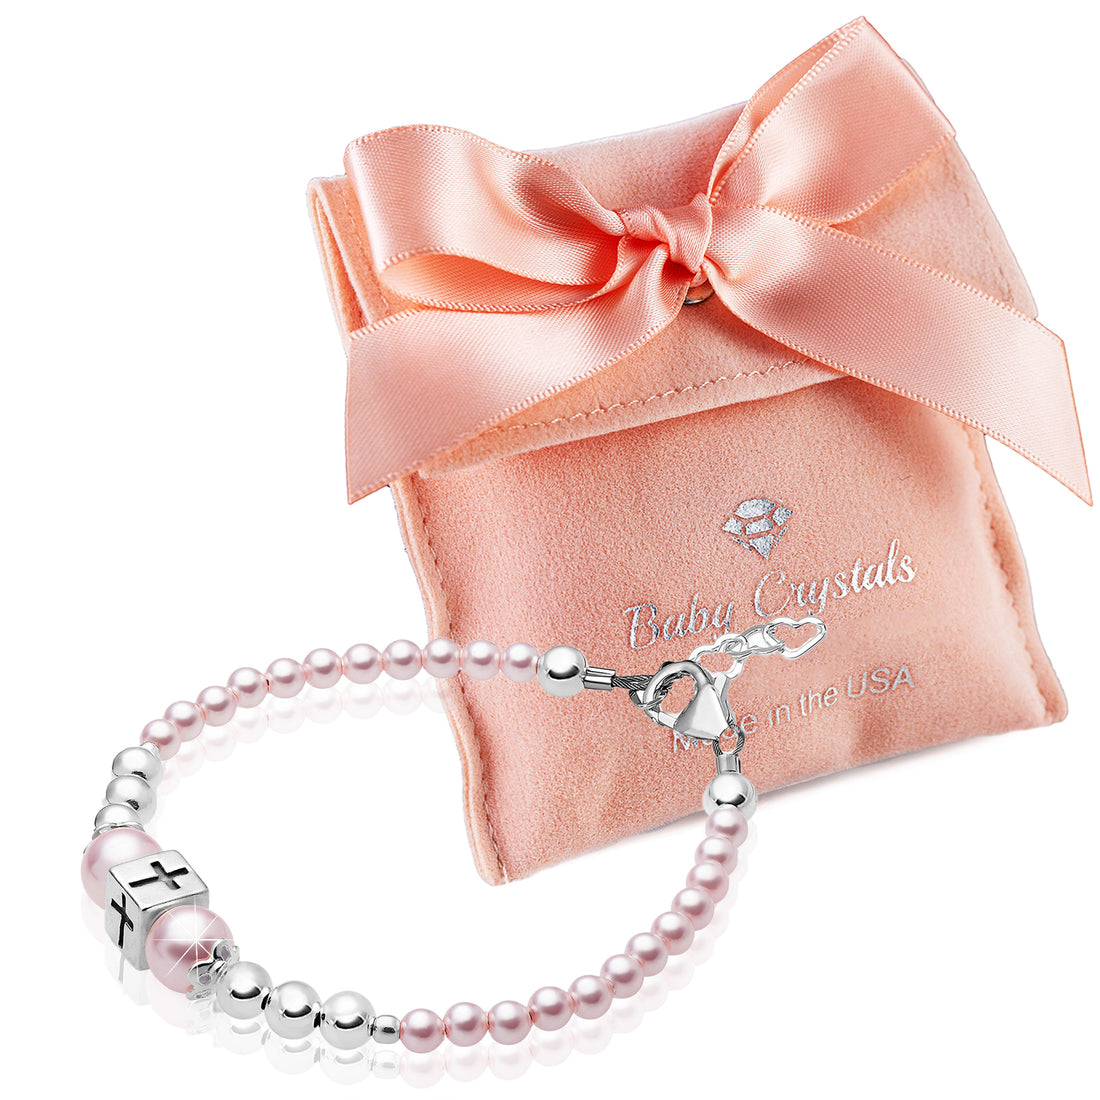 Toddler Baby Girl Sterling Silver Beads Box Cross Pink Pearl Bracelet